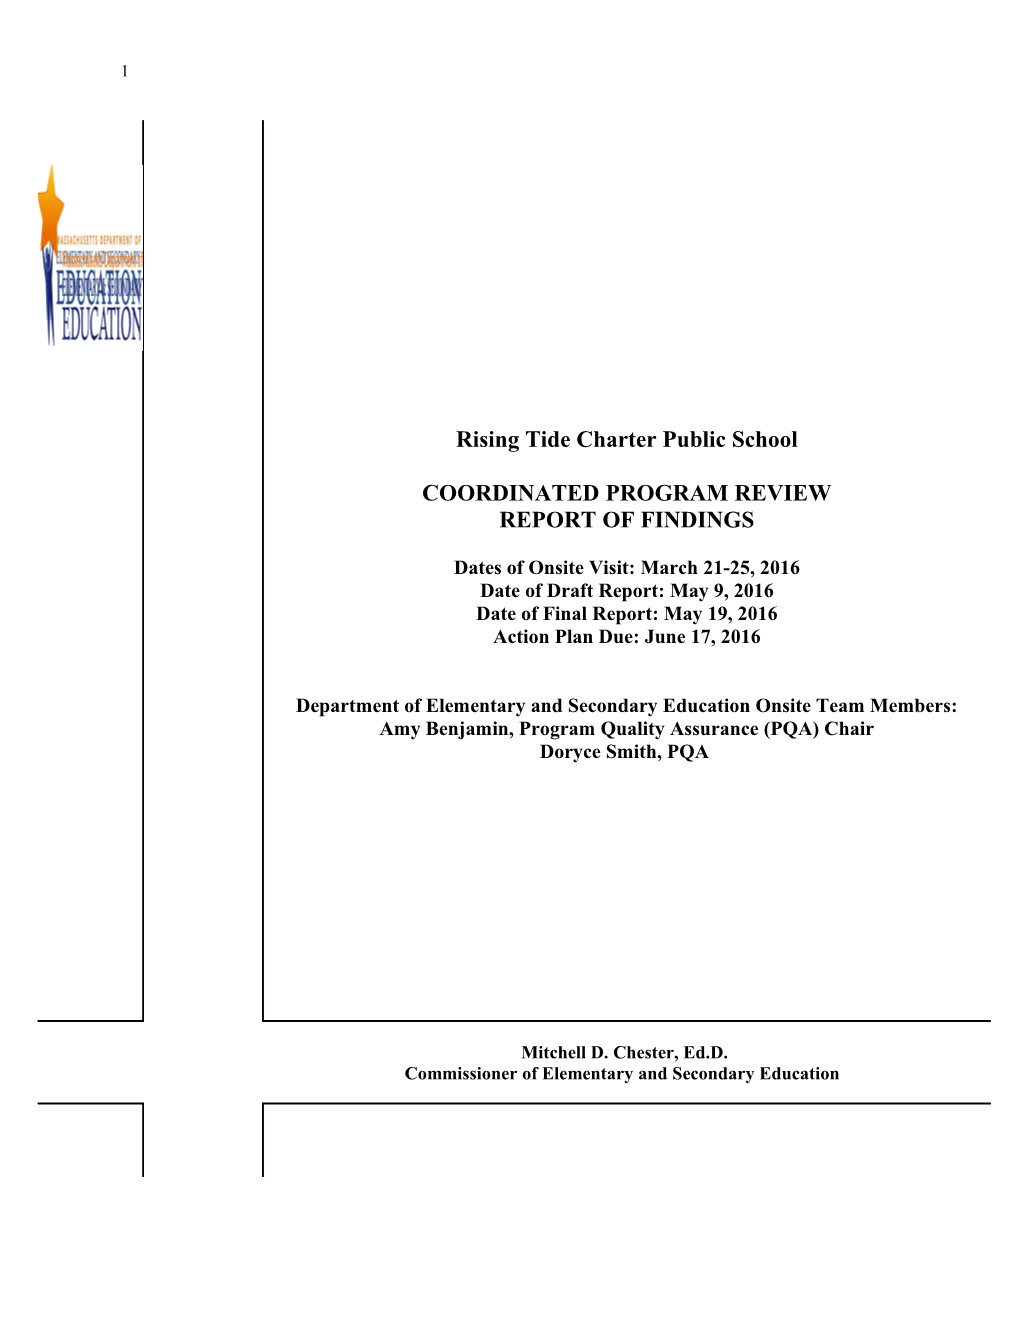 Rising Tide Charter School CPR Final Report 2016